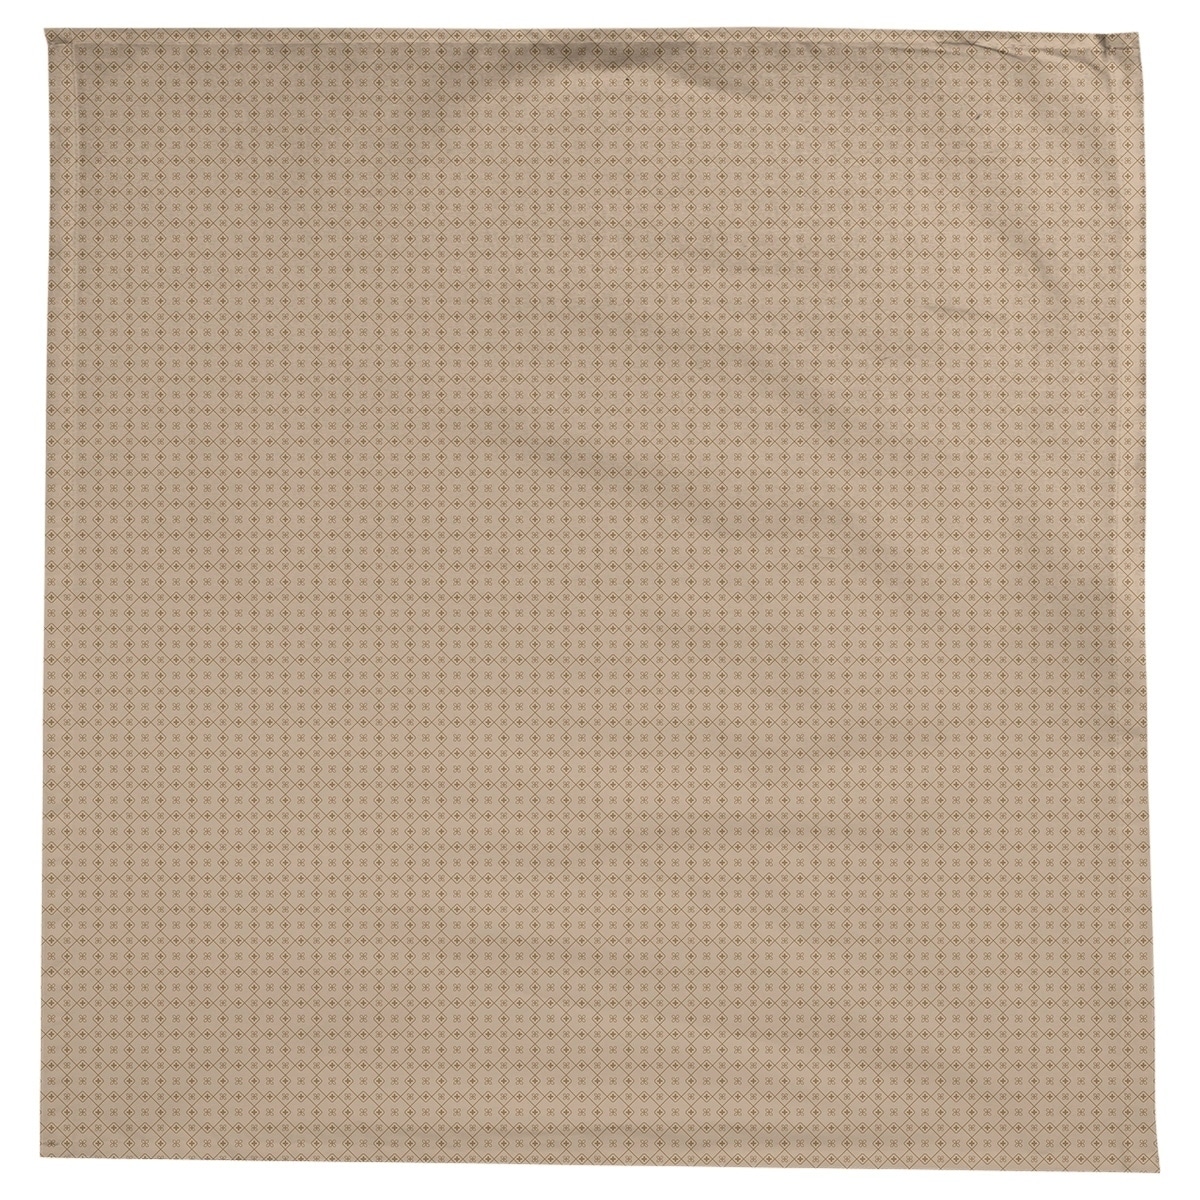 Monochrome Doily Pattern Square Tablecloth